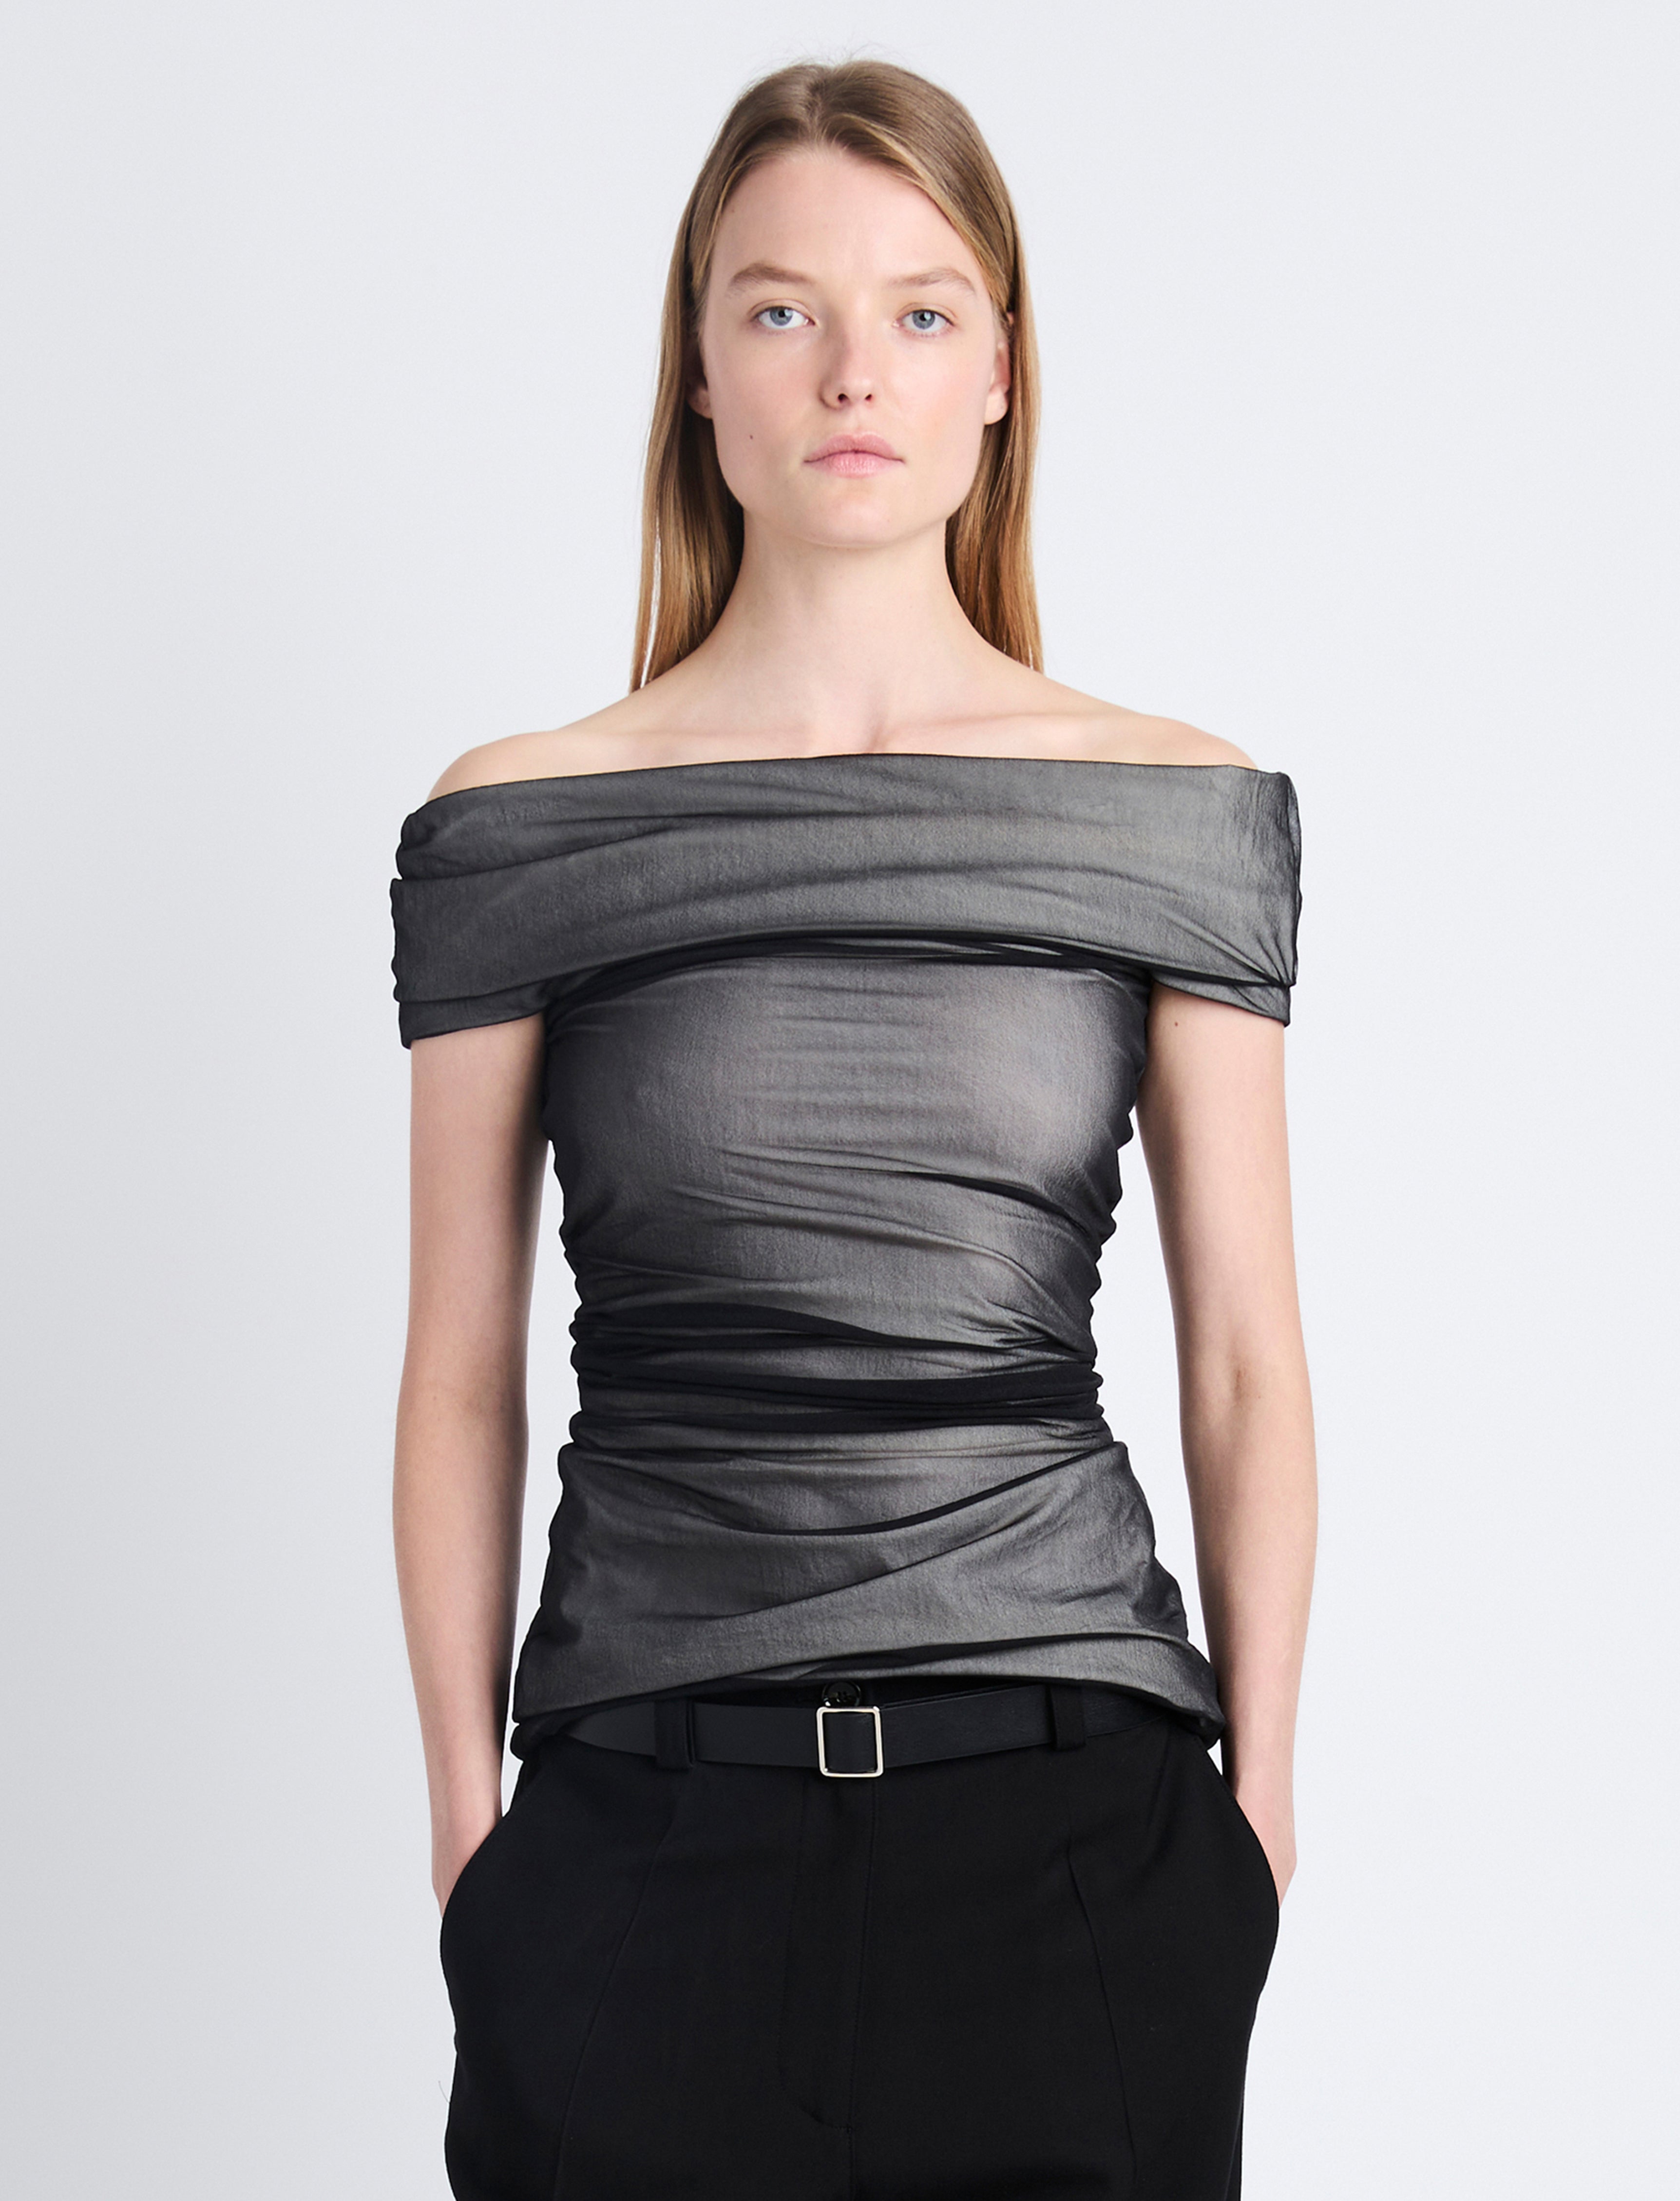 Allegra Off The Shoulder Top in Silk Nylon Black